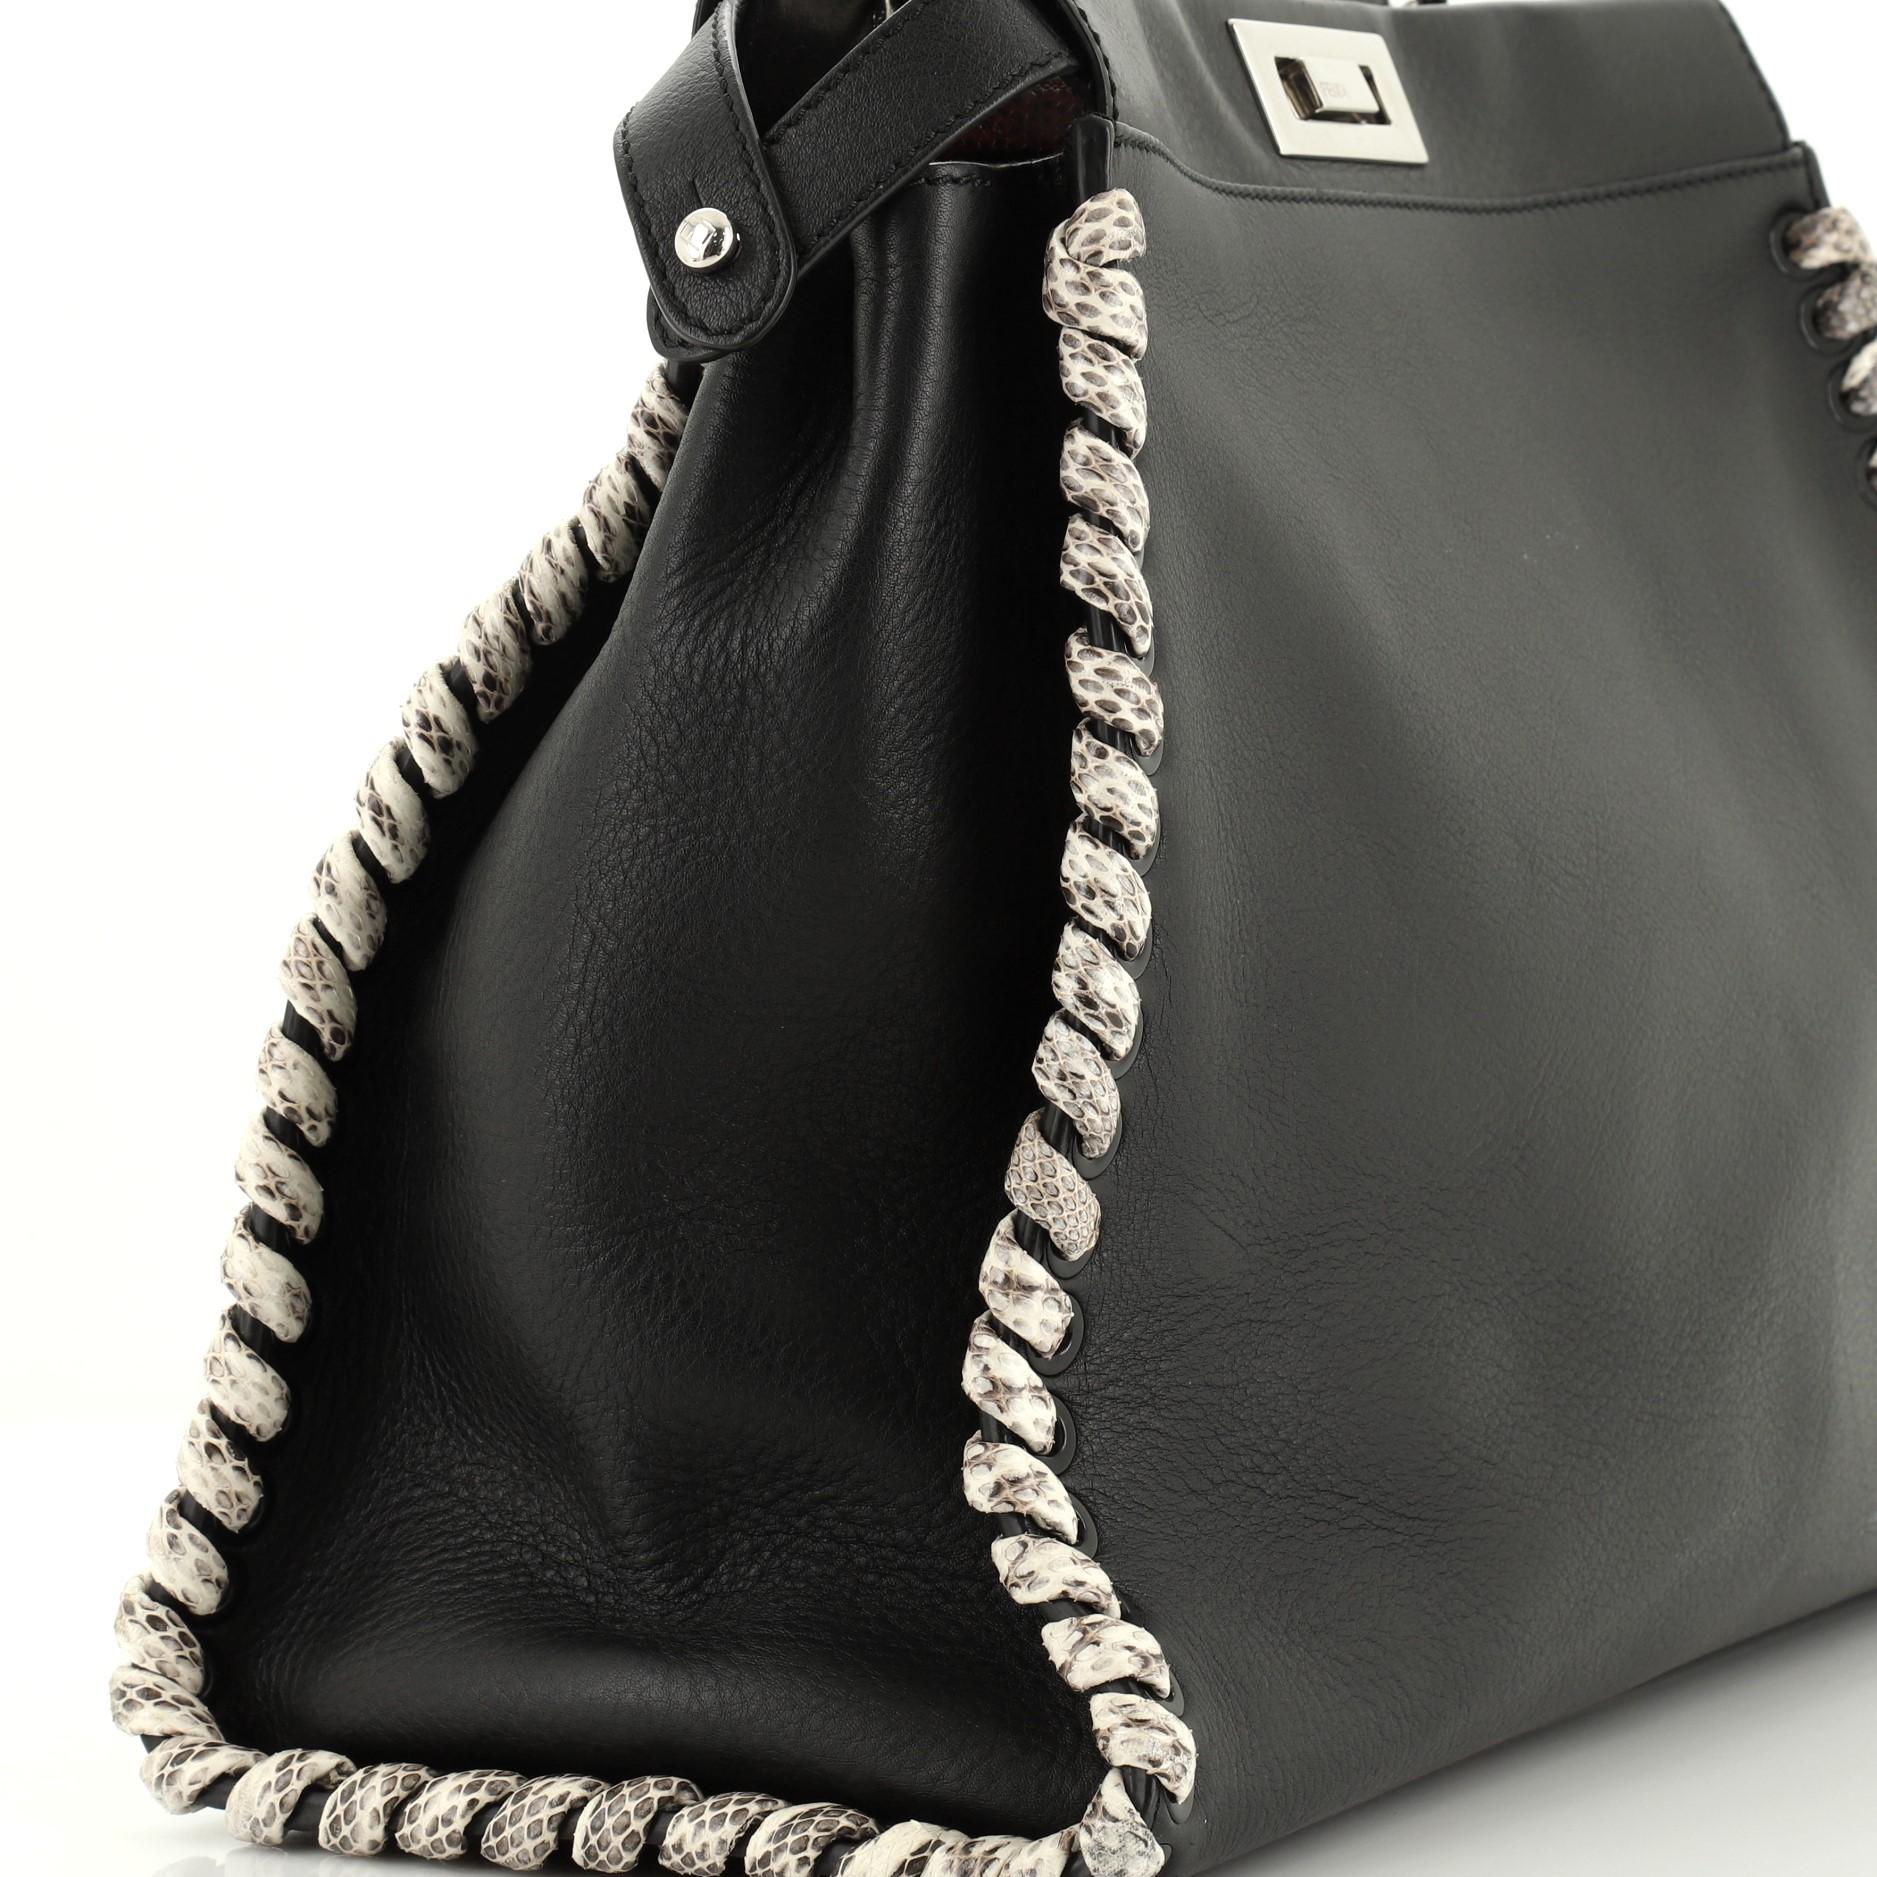 Fendi Peekaboo Bag Leather with Python Whipstitch Large 2